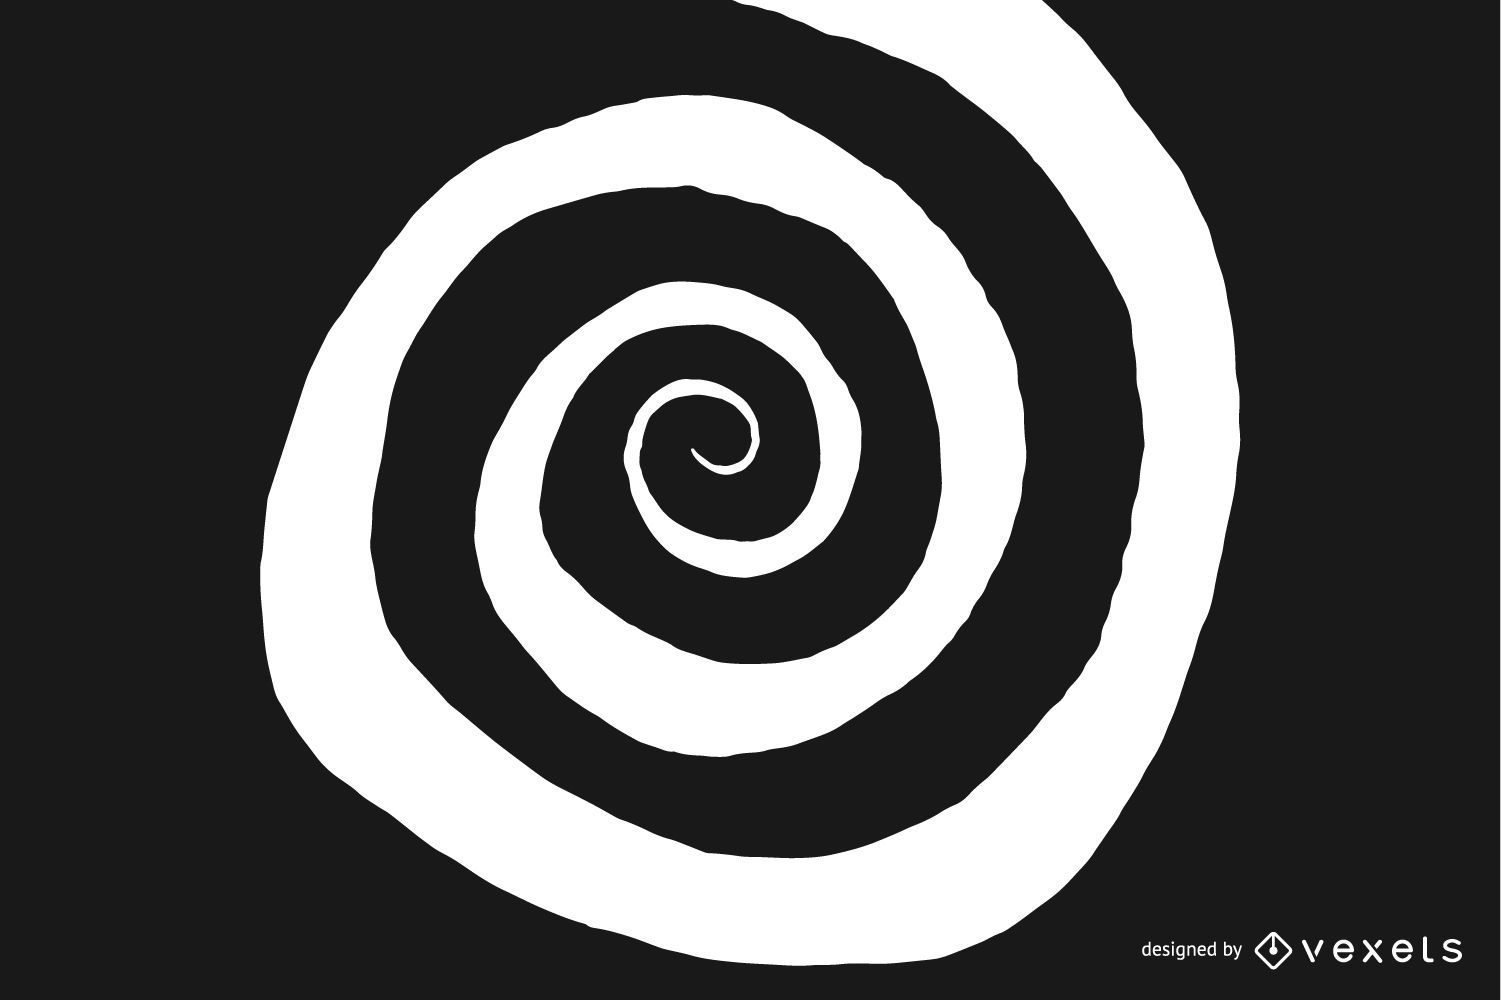 Irregular spiral shape